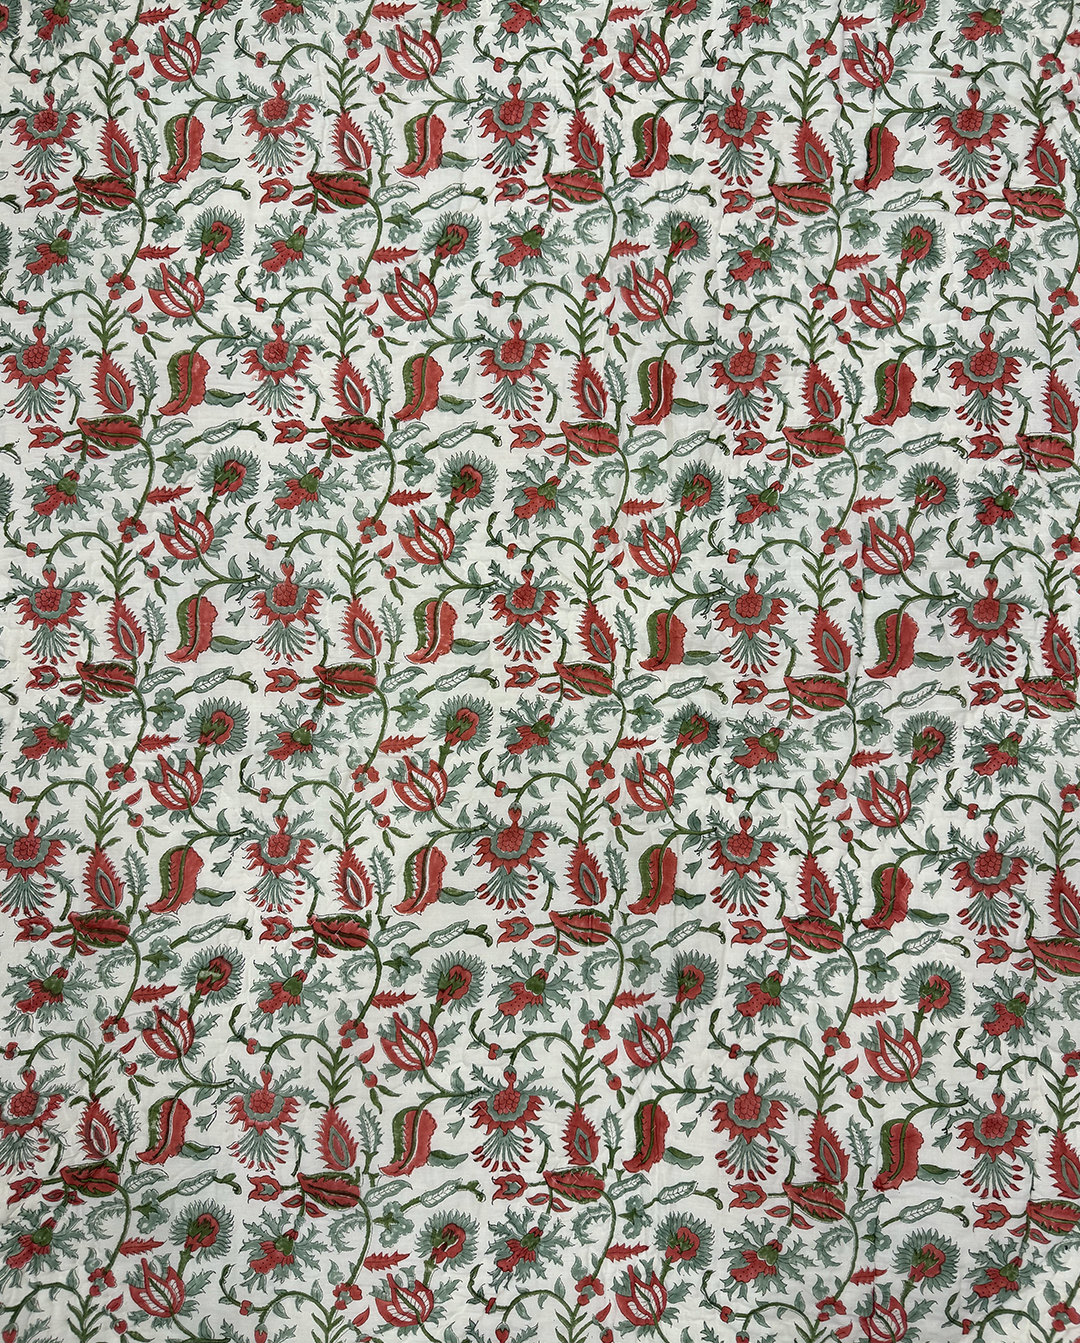 HandBlock Printed Reversable Cotton Quilt (108x108 inches)